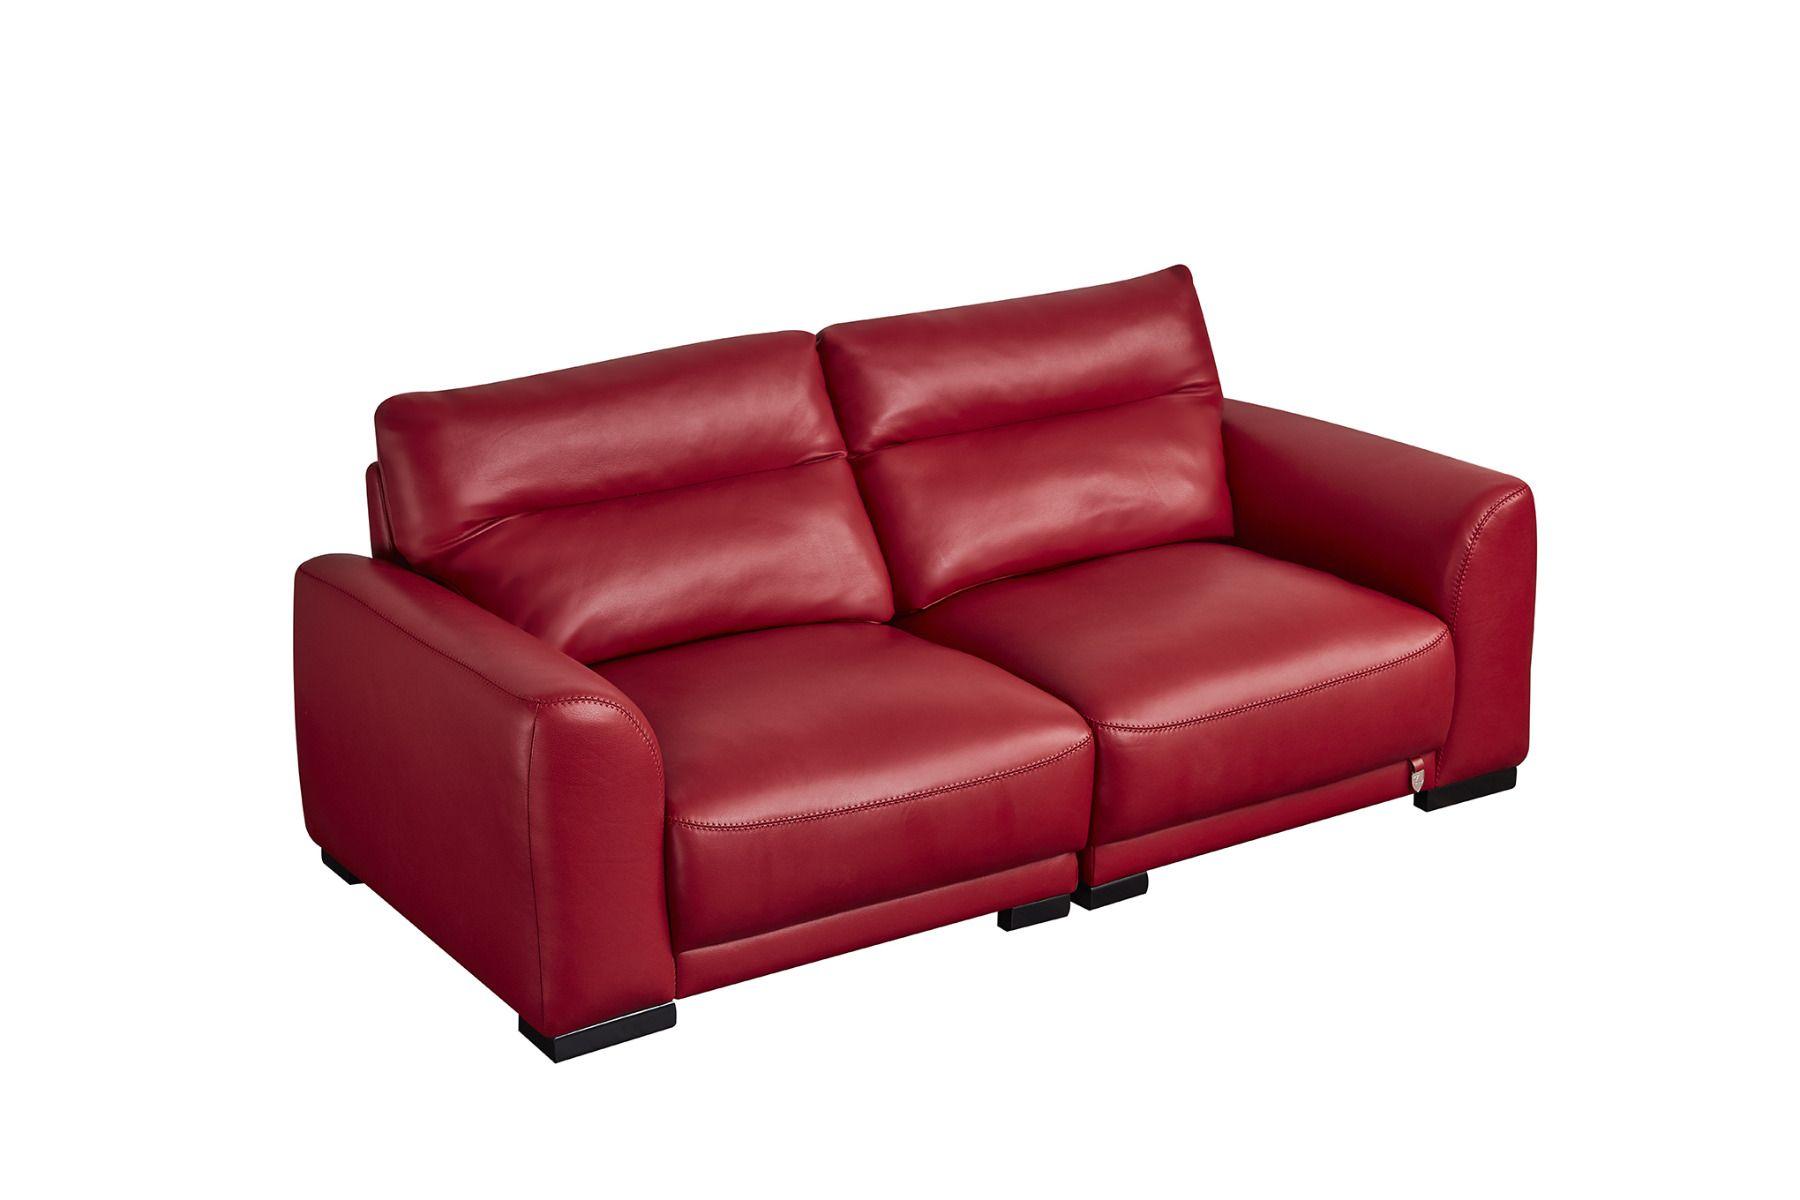 Oswald leather power reclining sofa